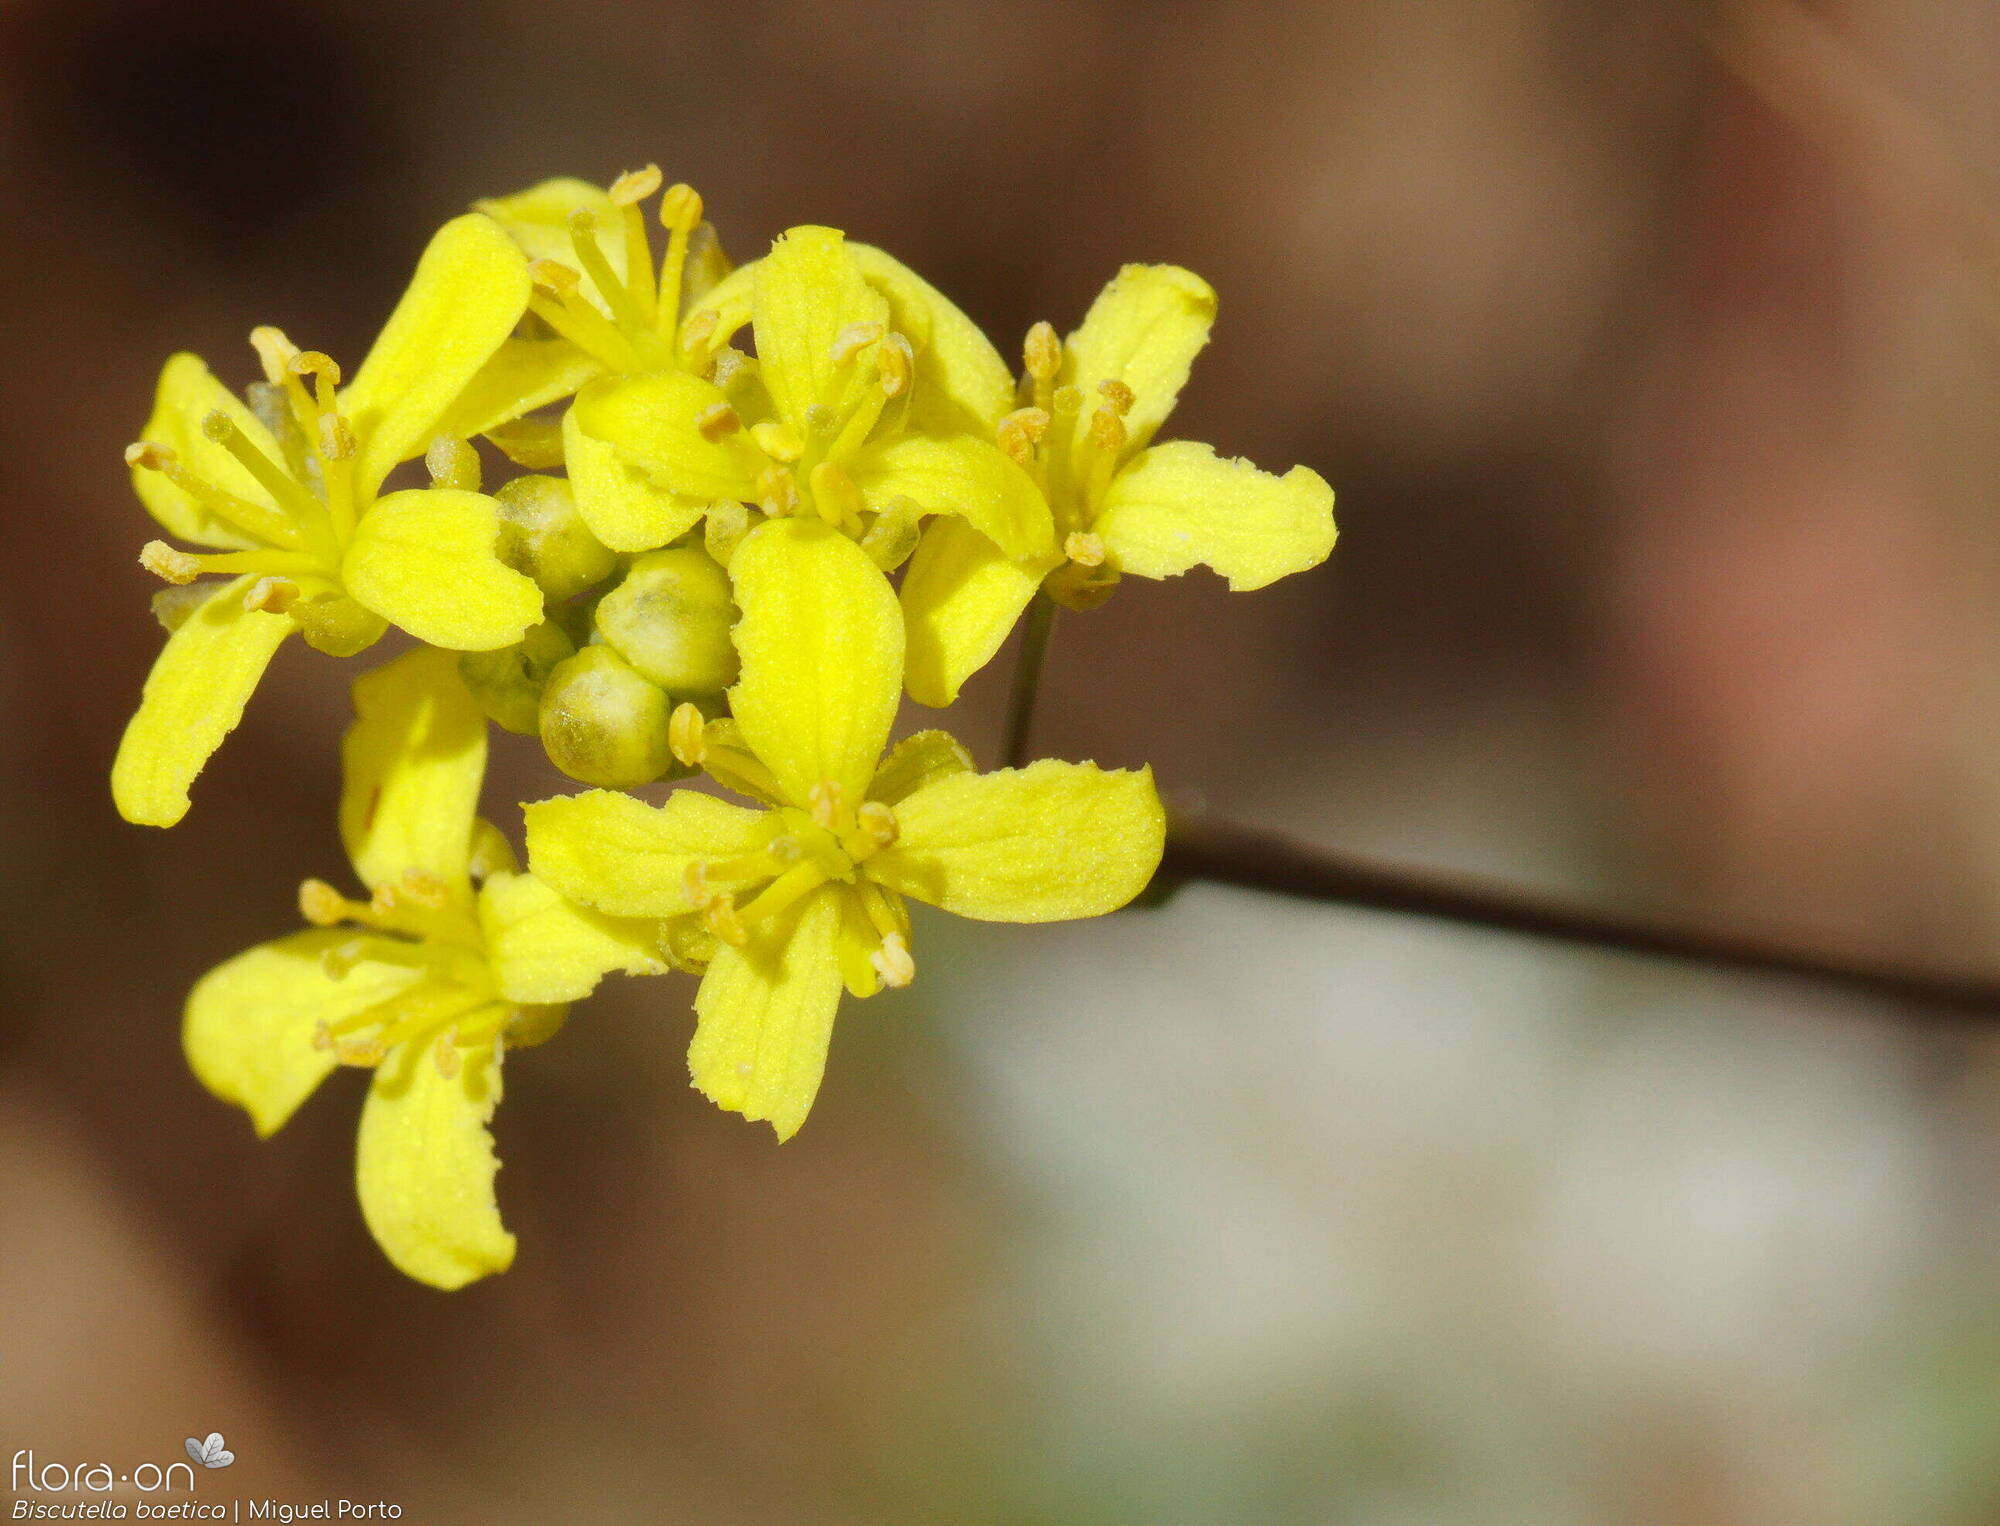 Biscutella baetica - Flor (close-up) | Miguel Porto; CC BY-NC 4.0